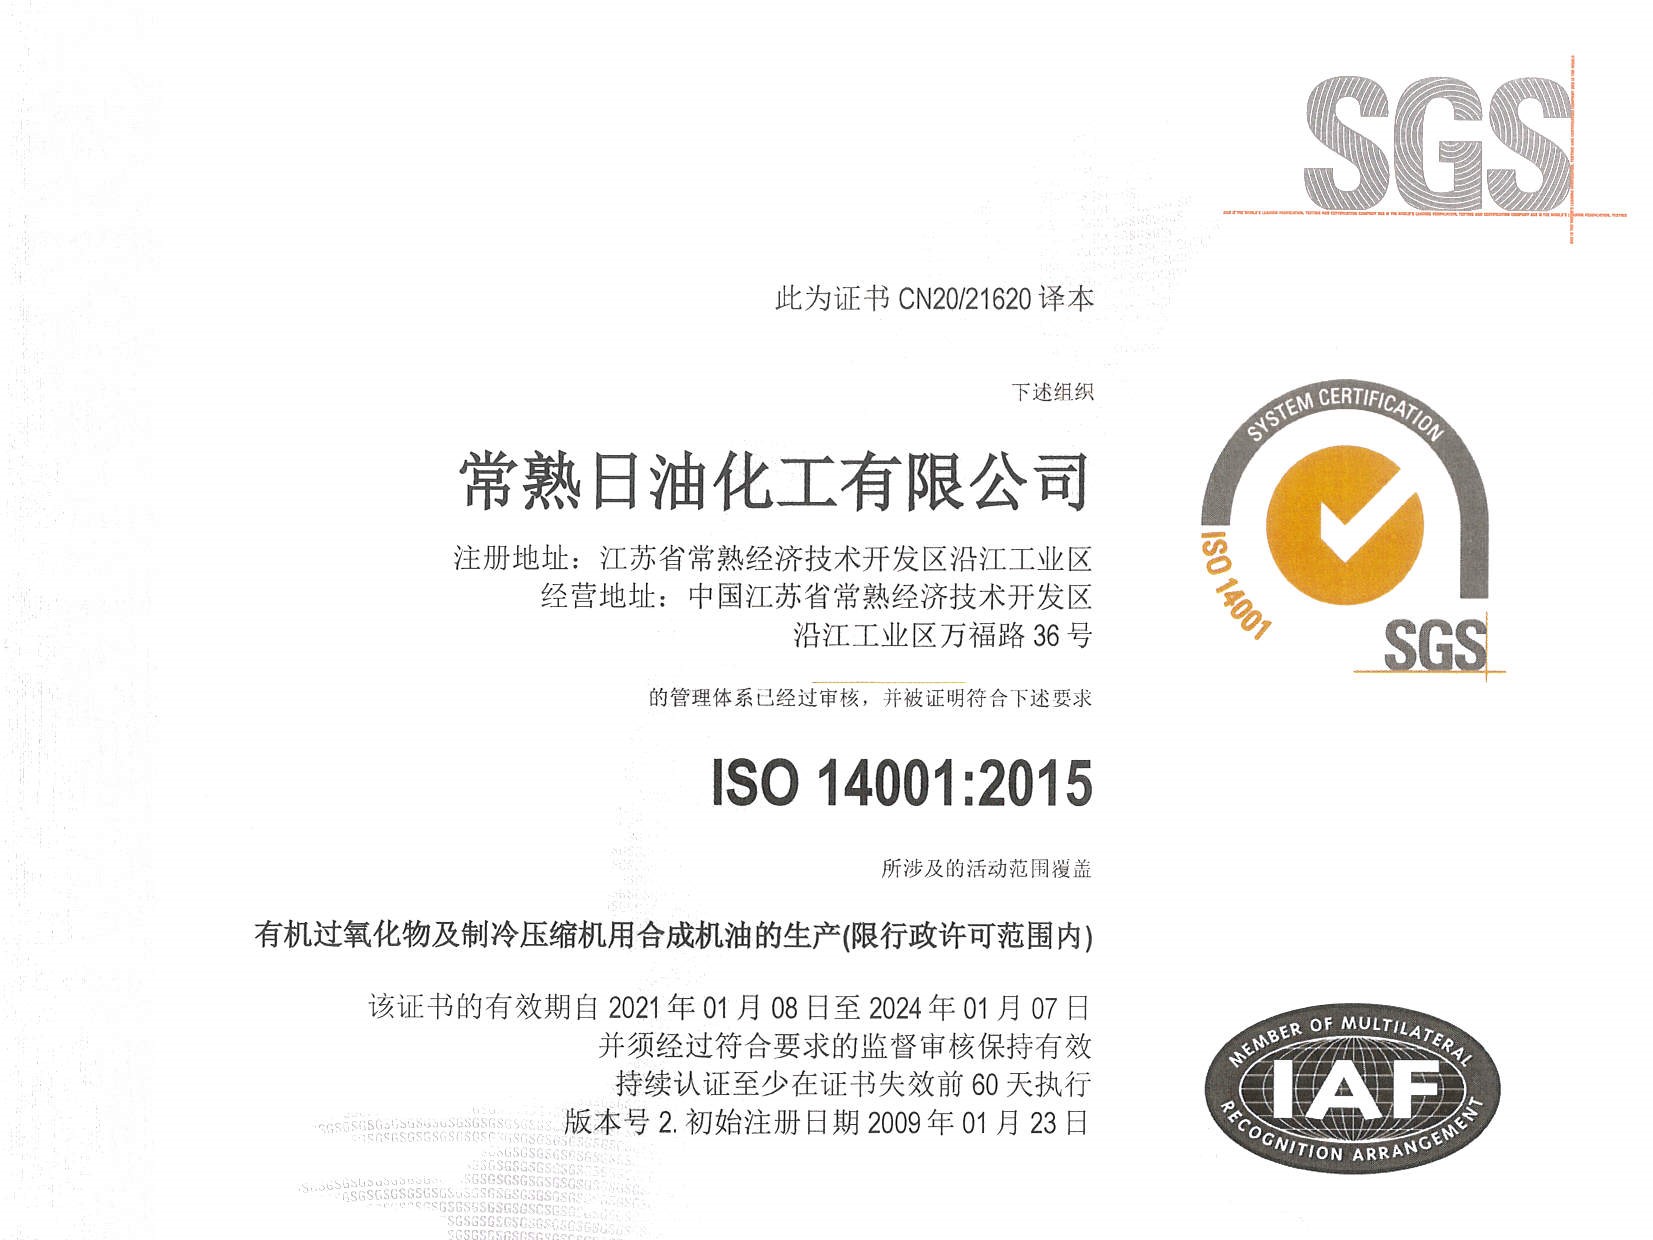  IOS14001证书